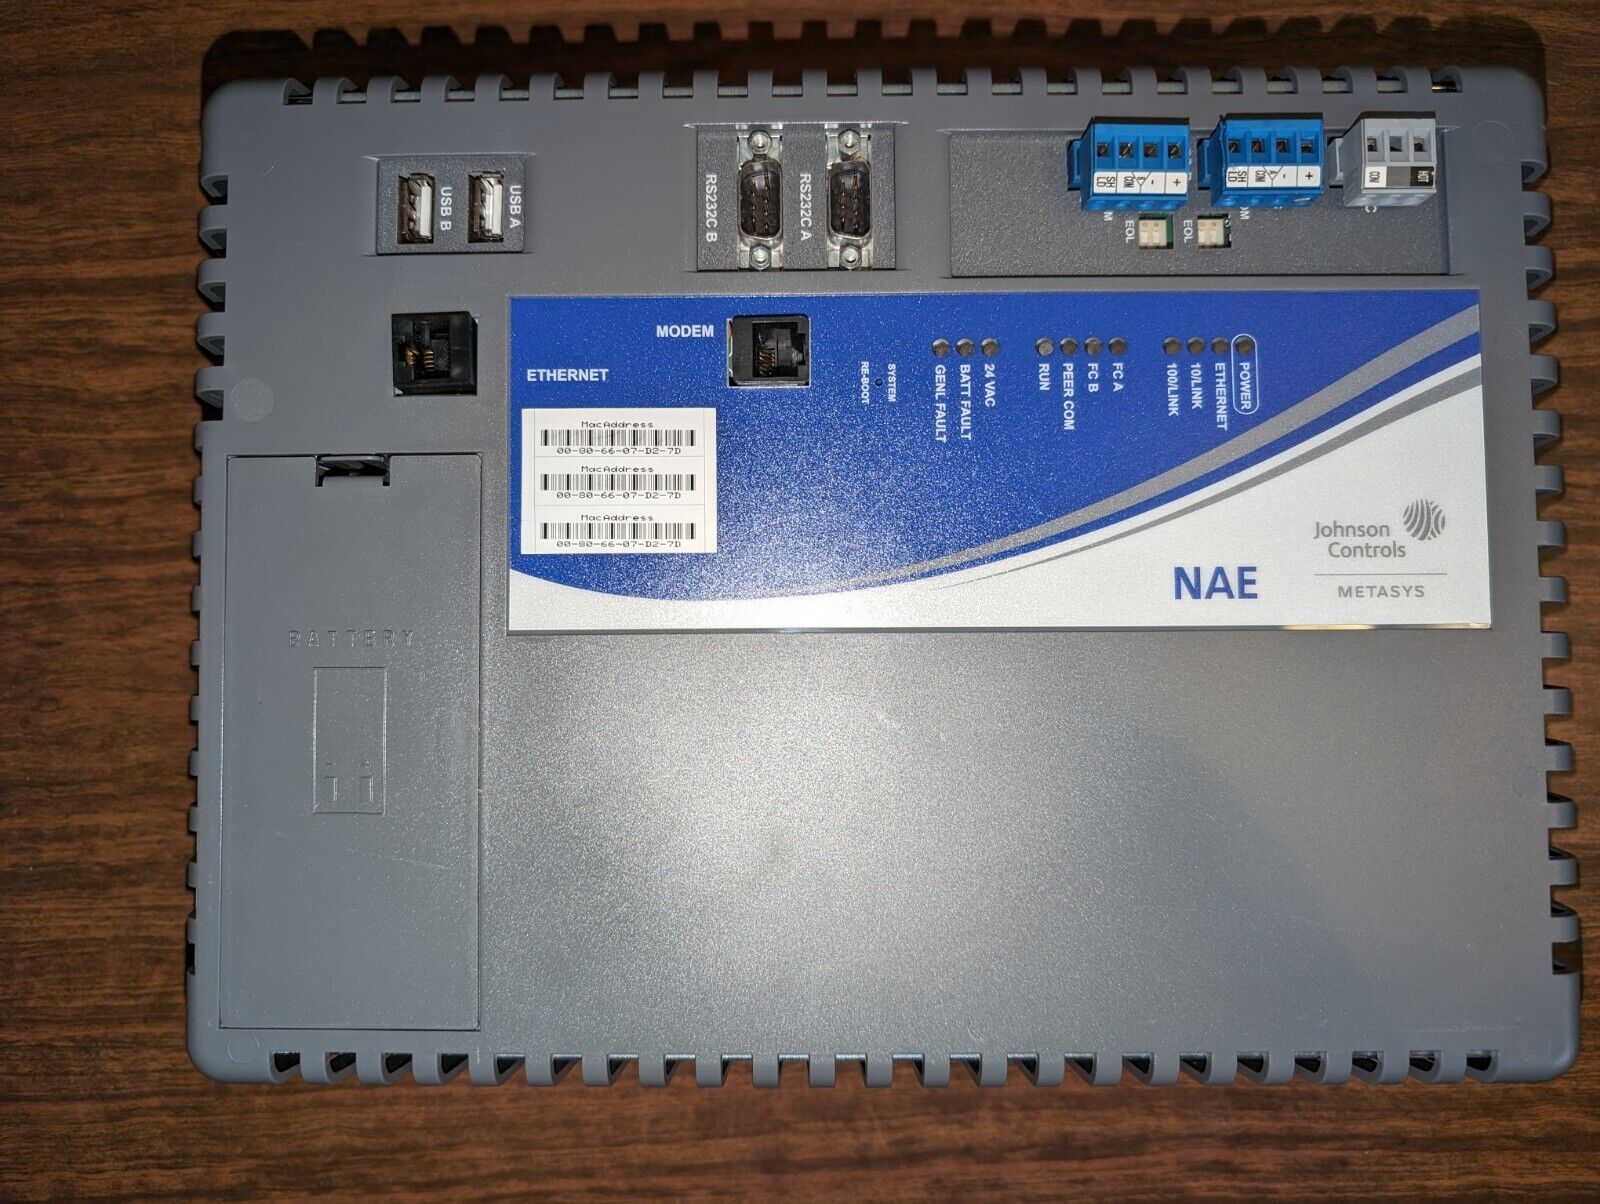 Johnson Controls Metasys MS-NAE5511-1 Network Engine NAE 5511 Ver. 5.0